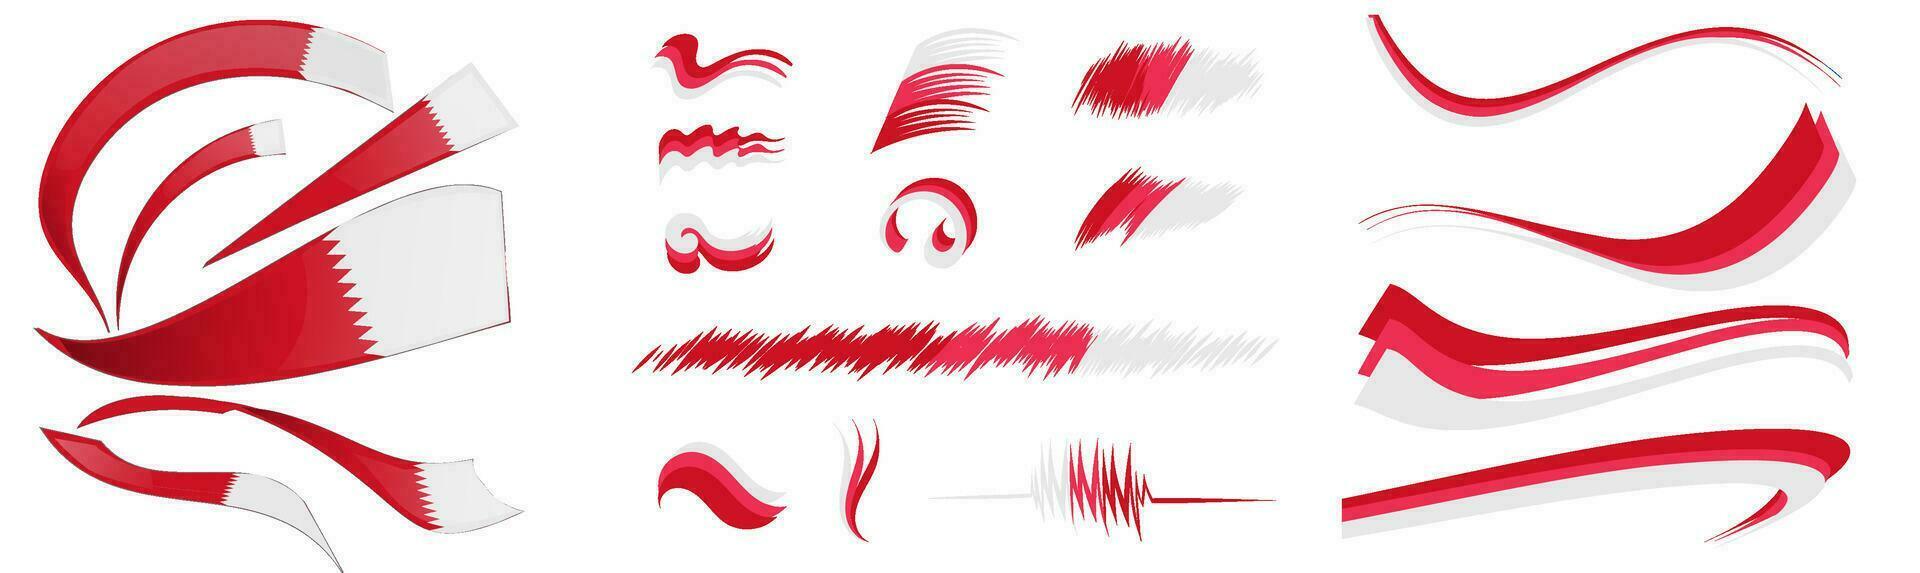 Bahrein flag set elements, vector illustration on a white background